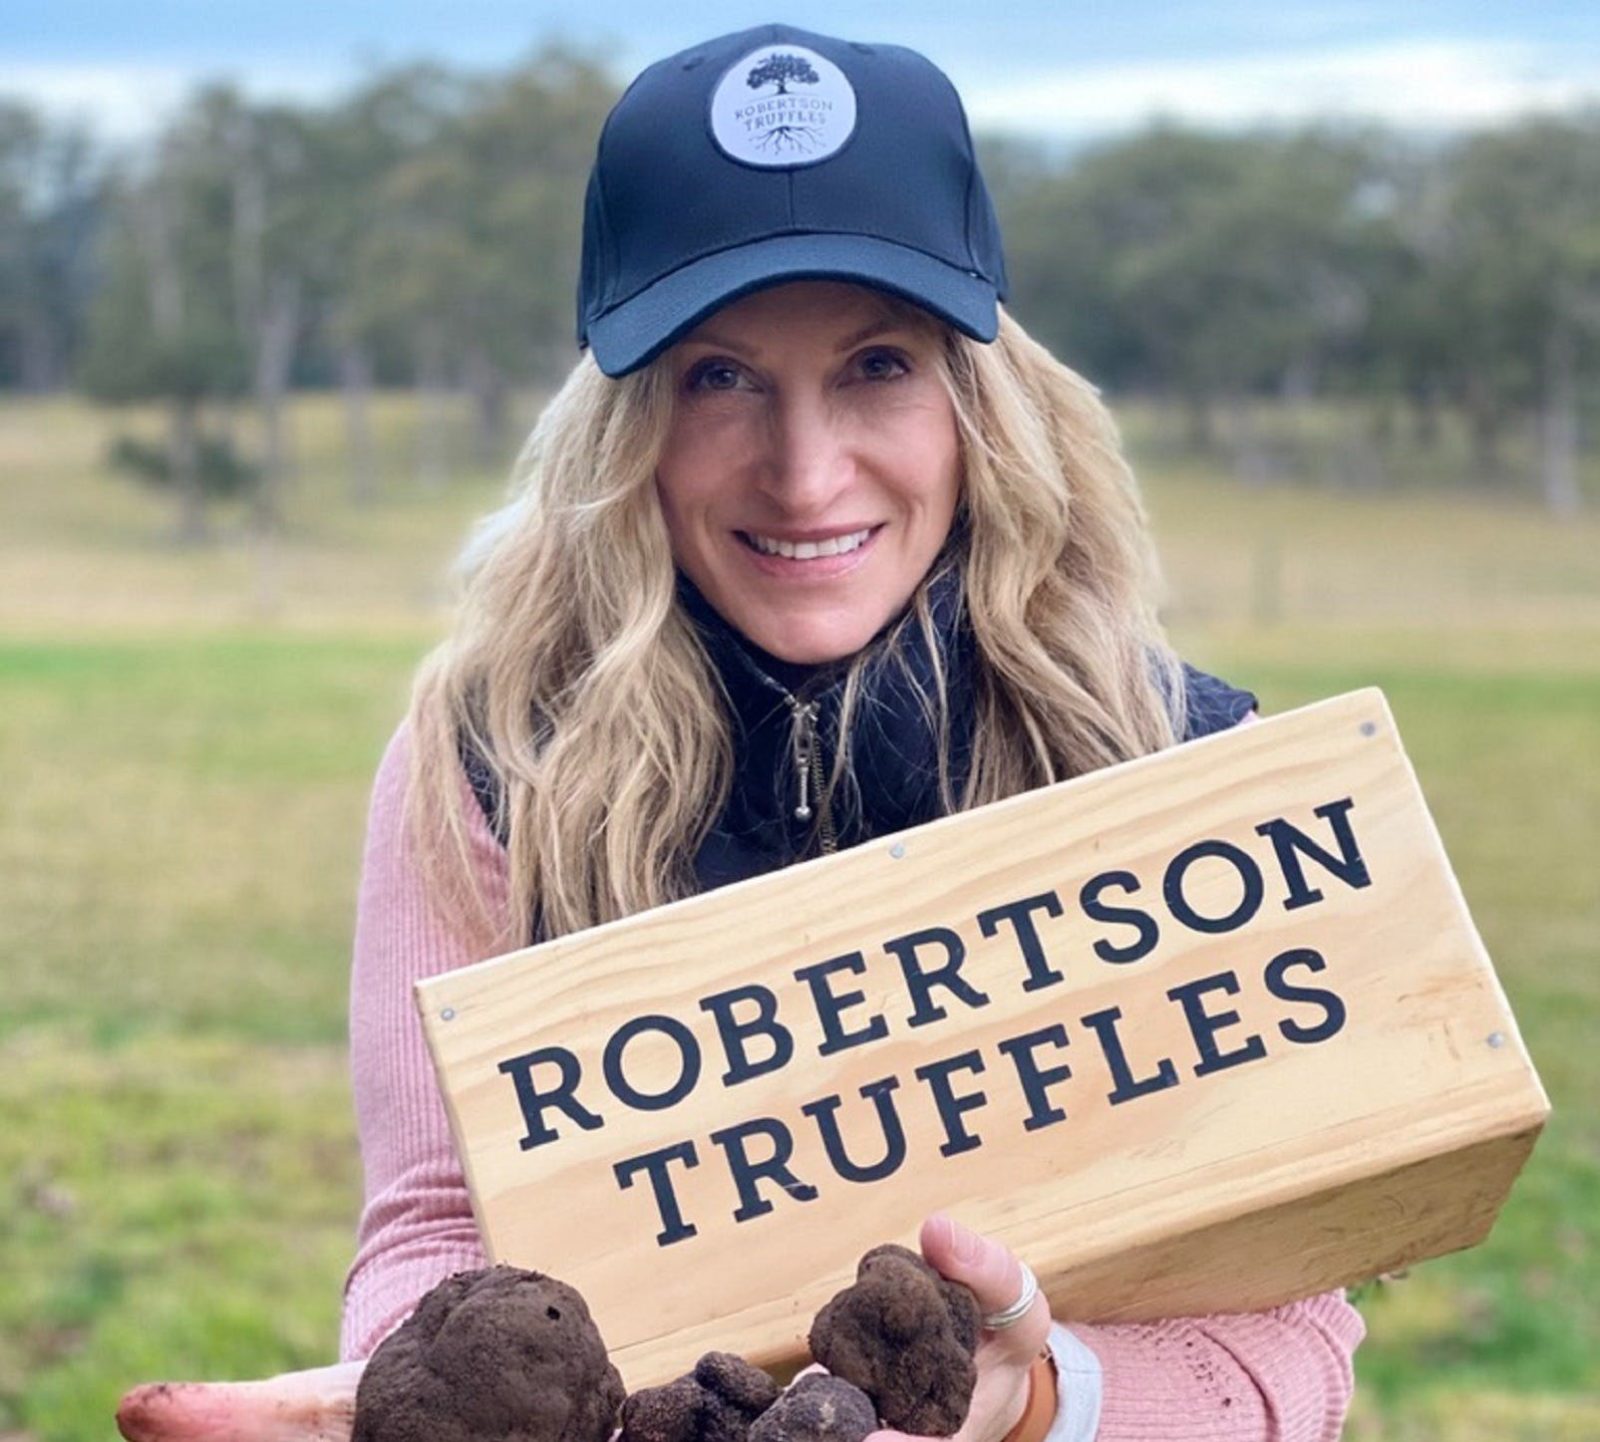 Robertson Truffles